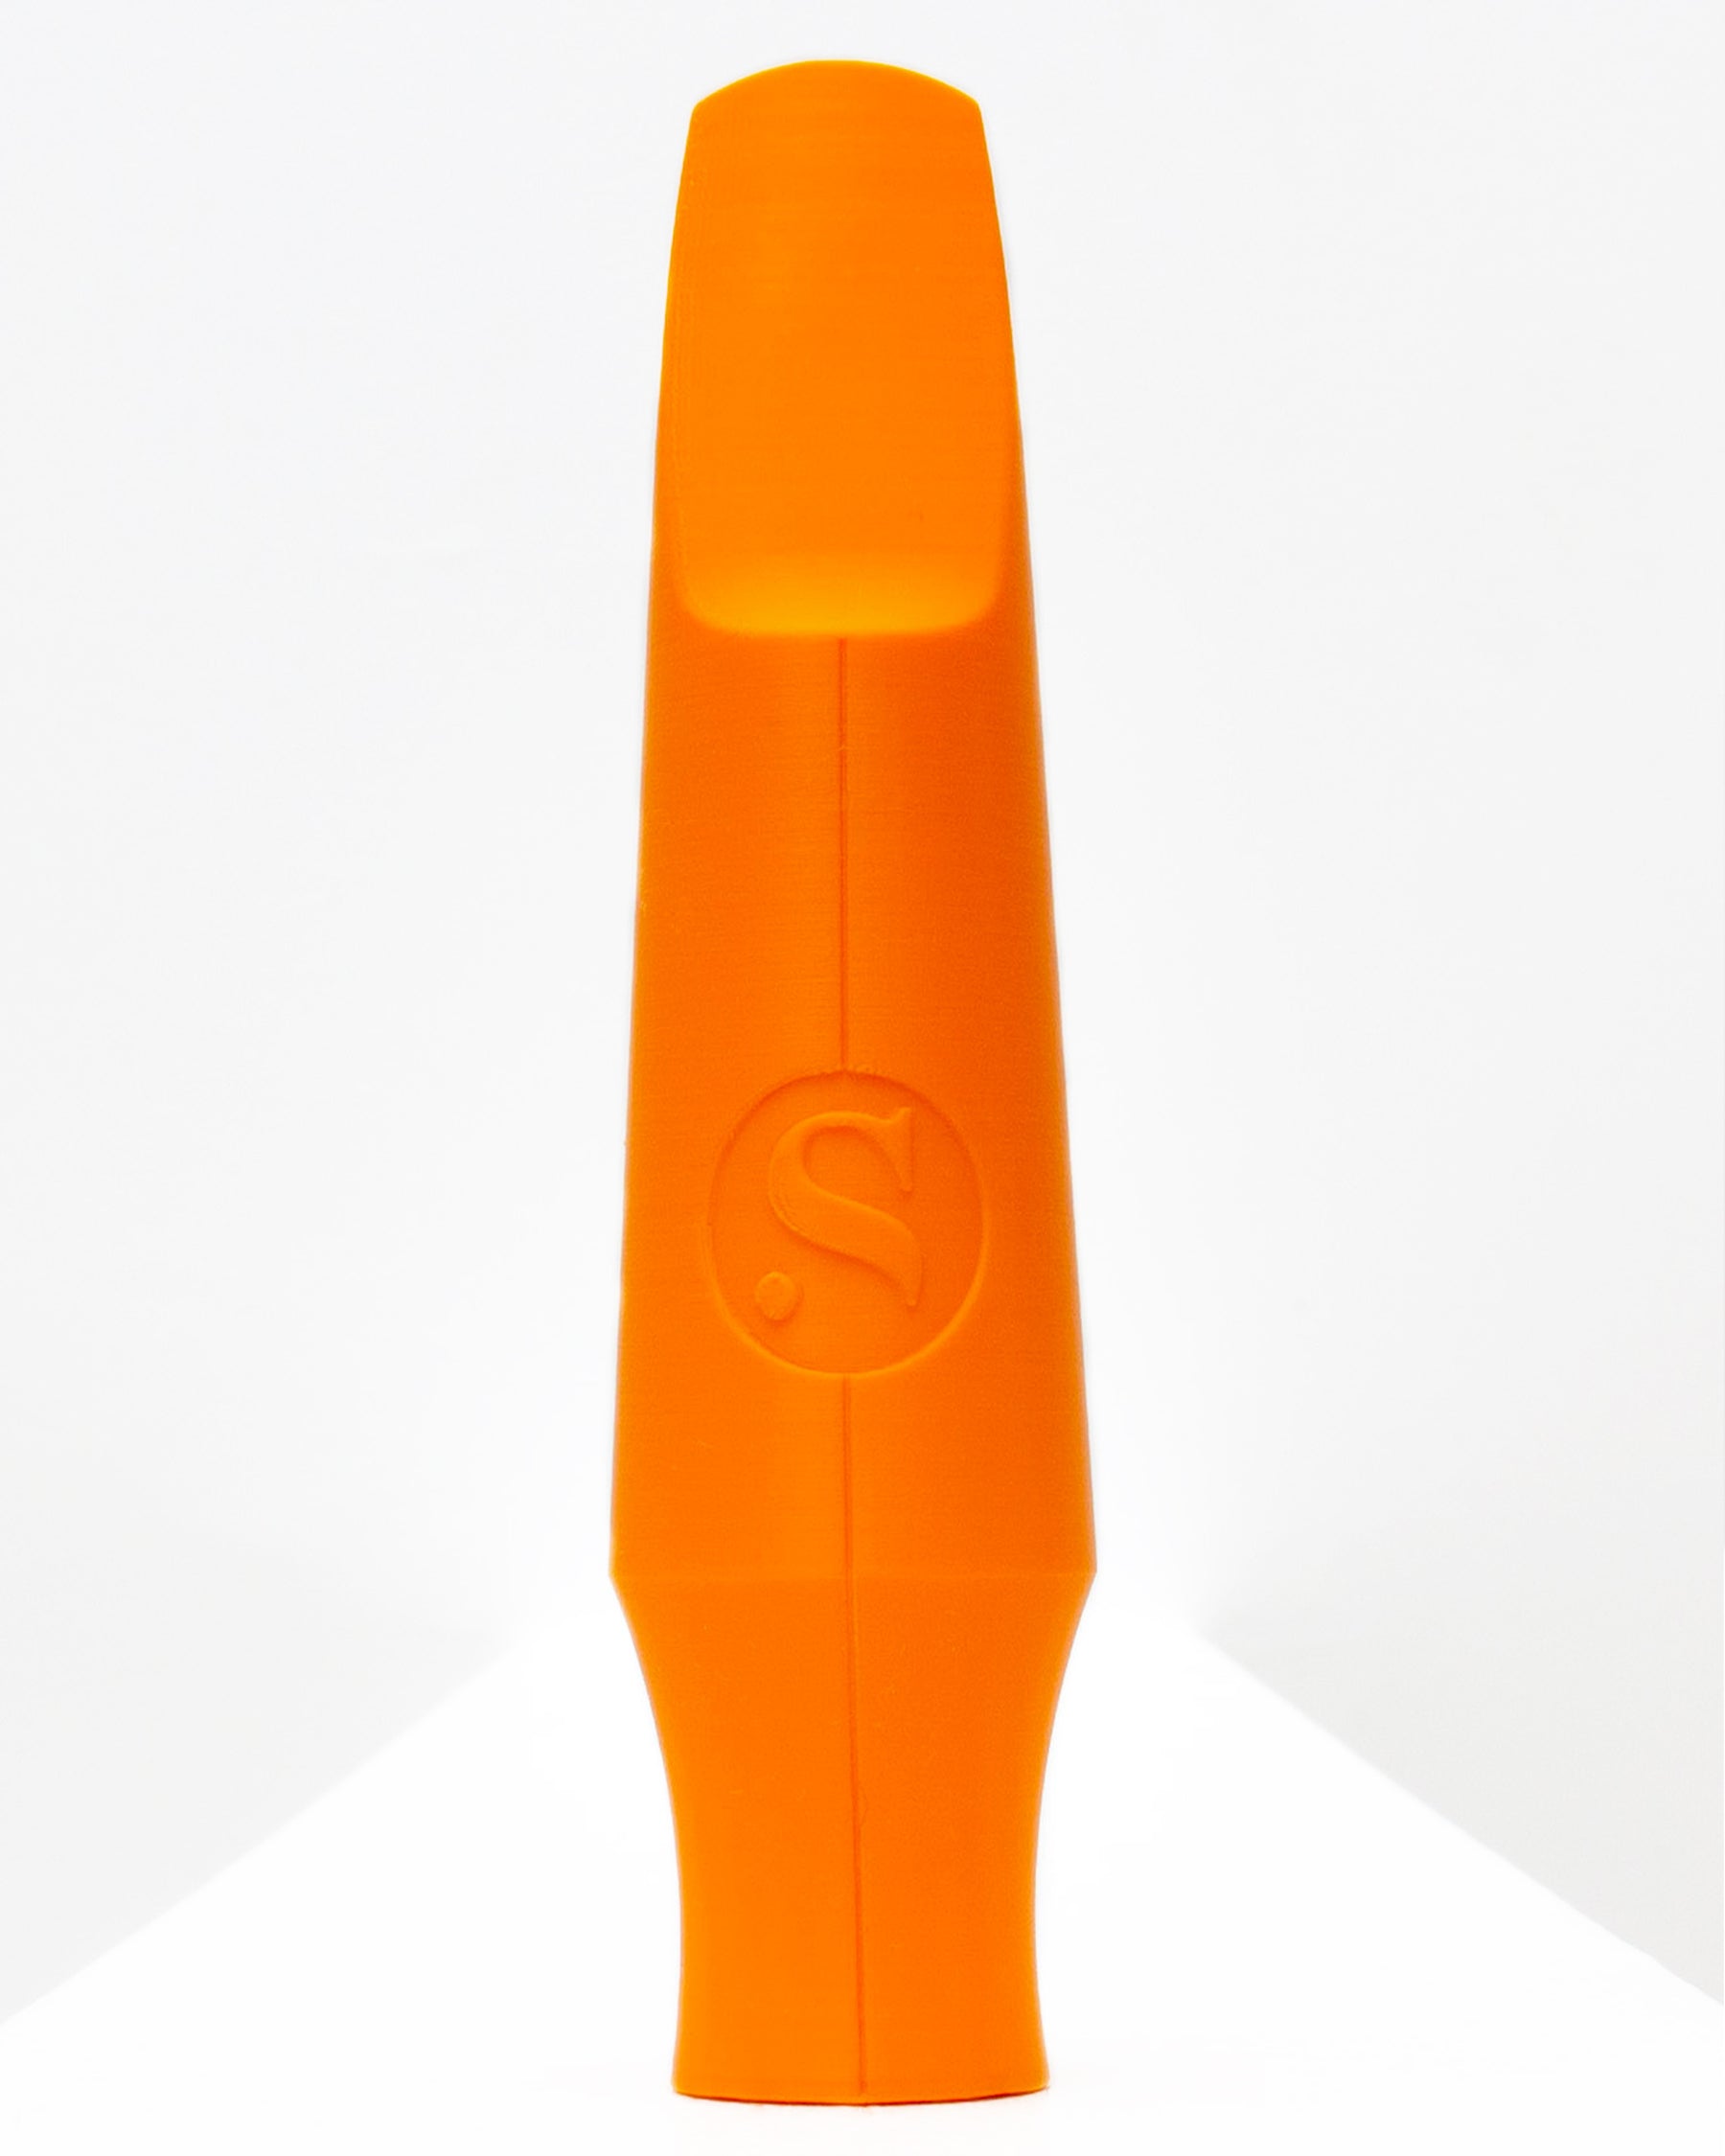 Baritone Signature Saxophone mouthpiece - Wenzl Mcgowen by Syos - 9 / Lava Orange